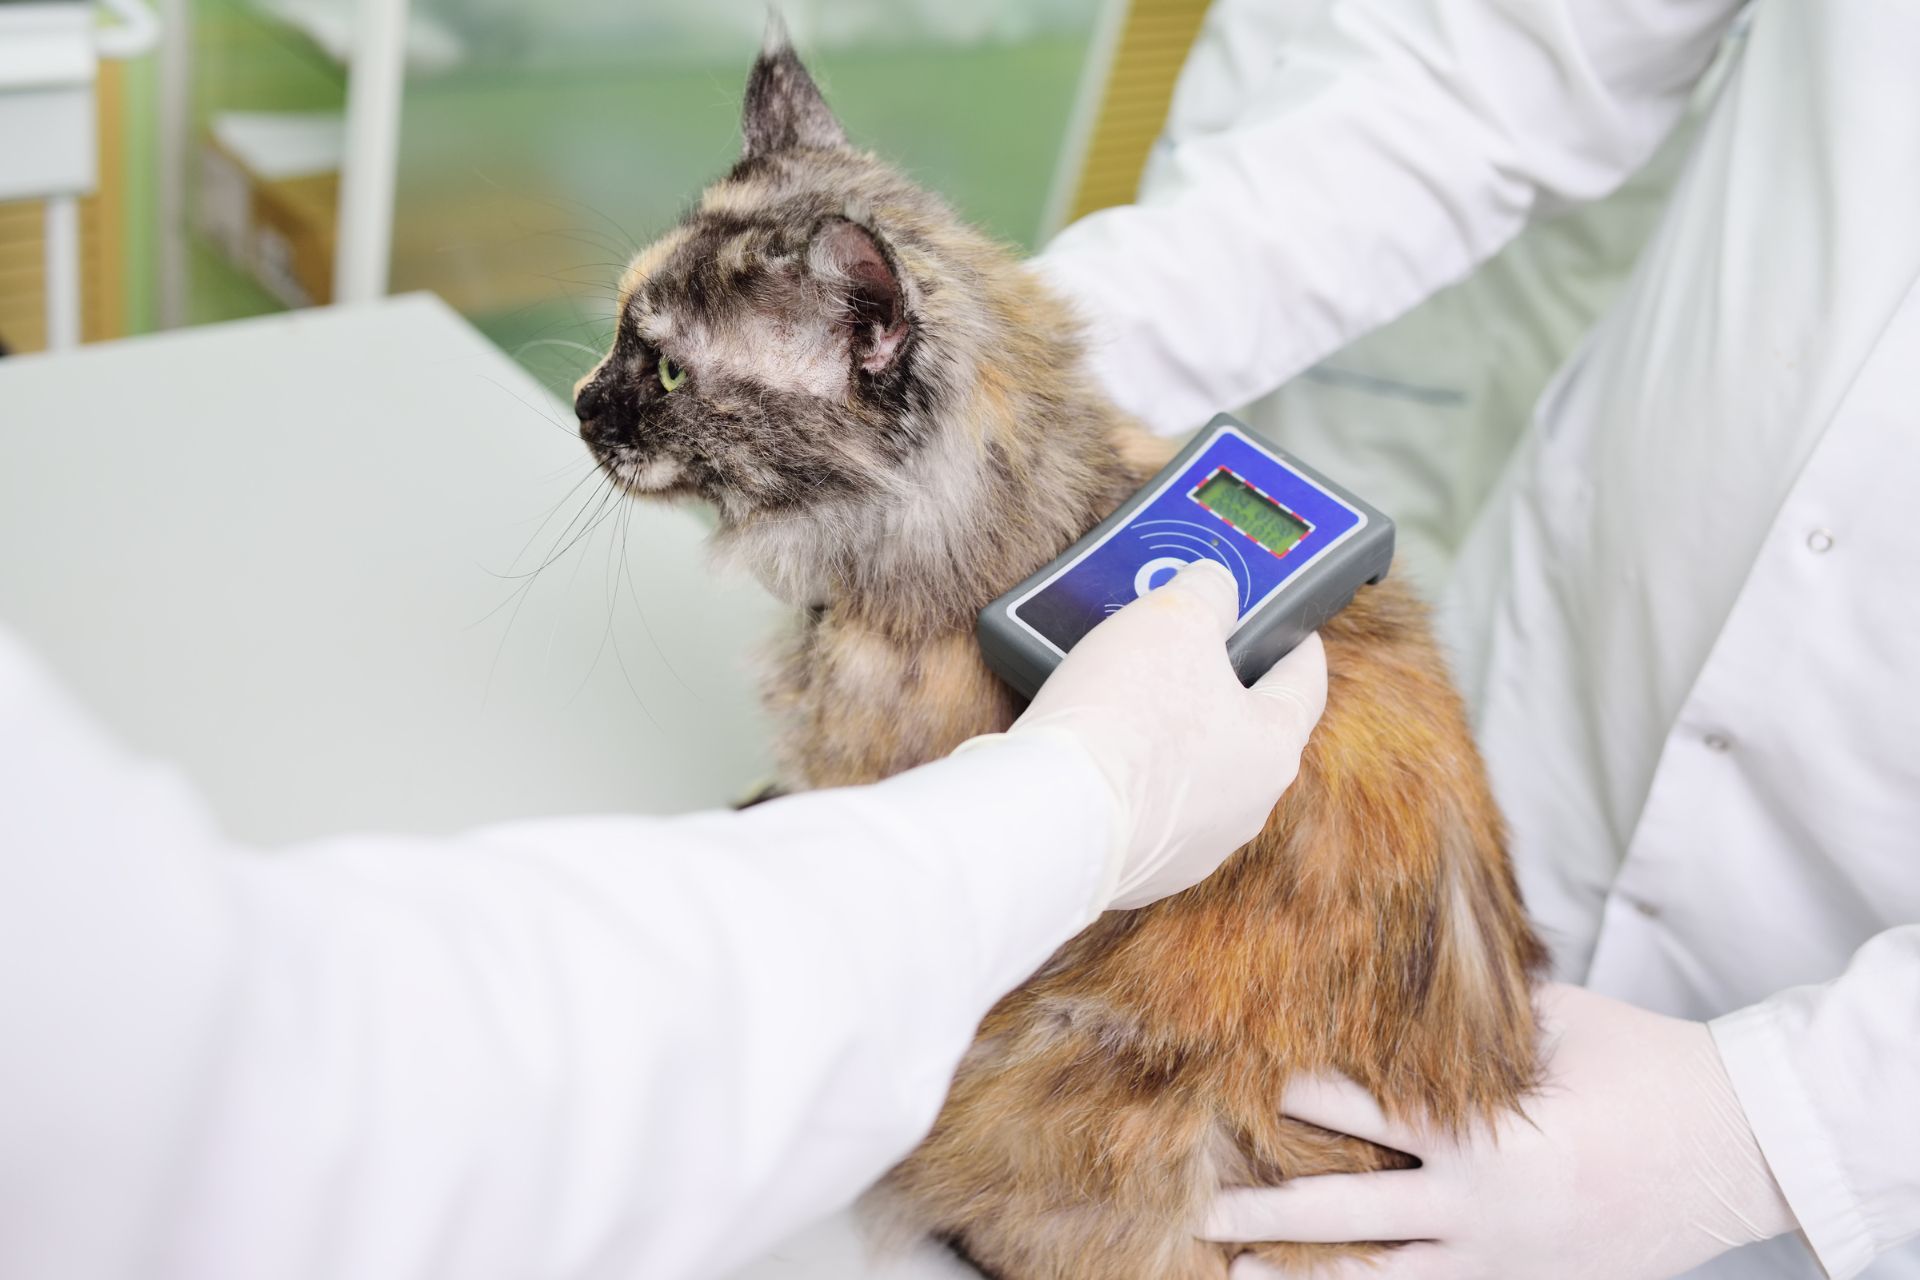 veterinarian scans imcrochip on a cat